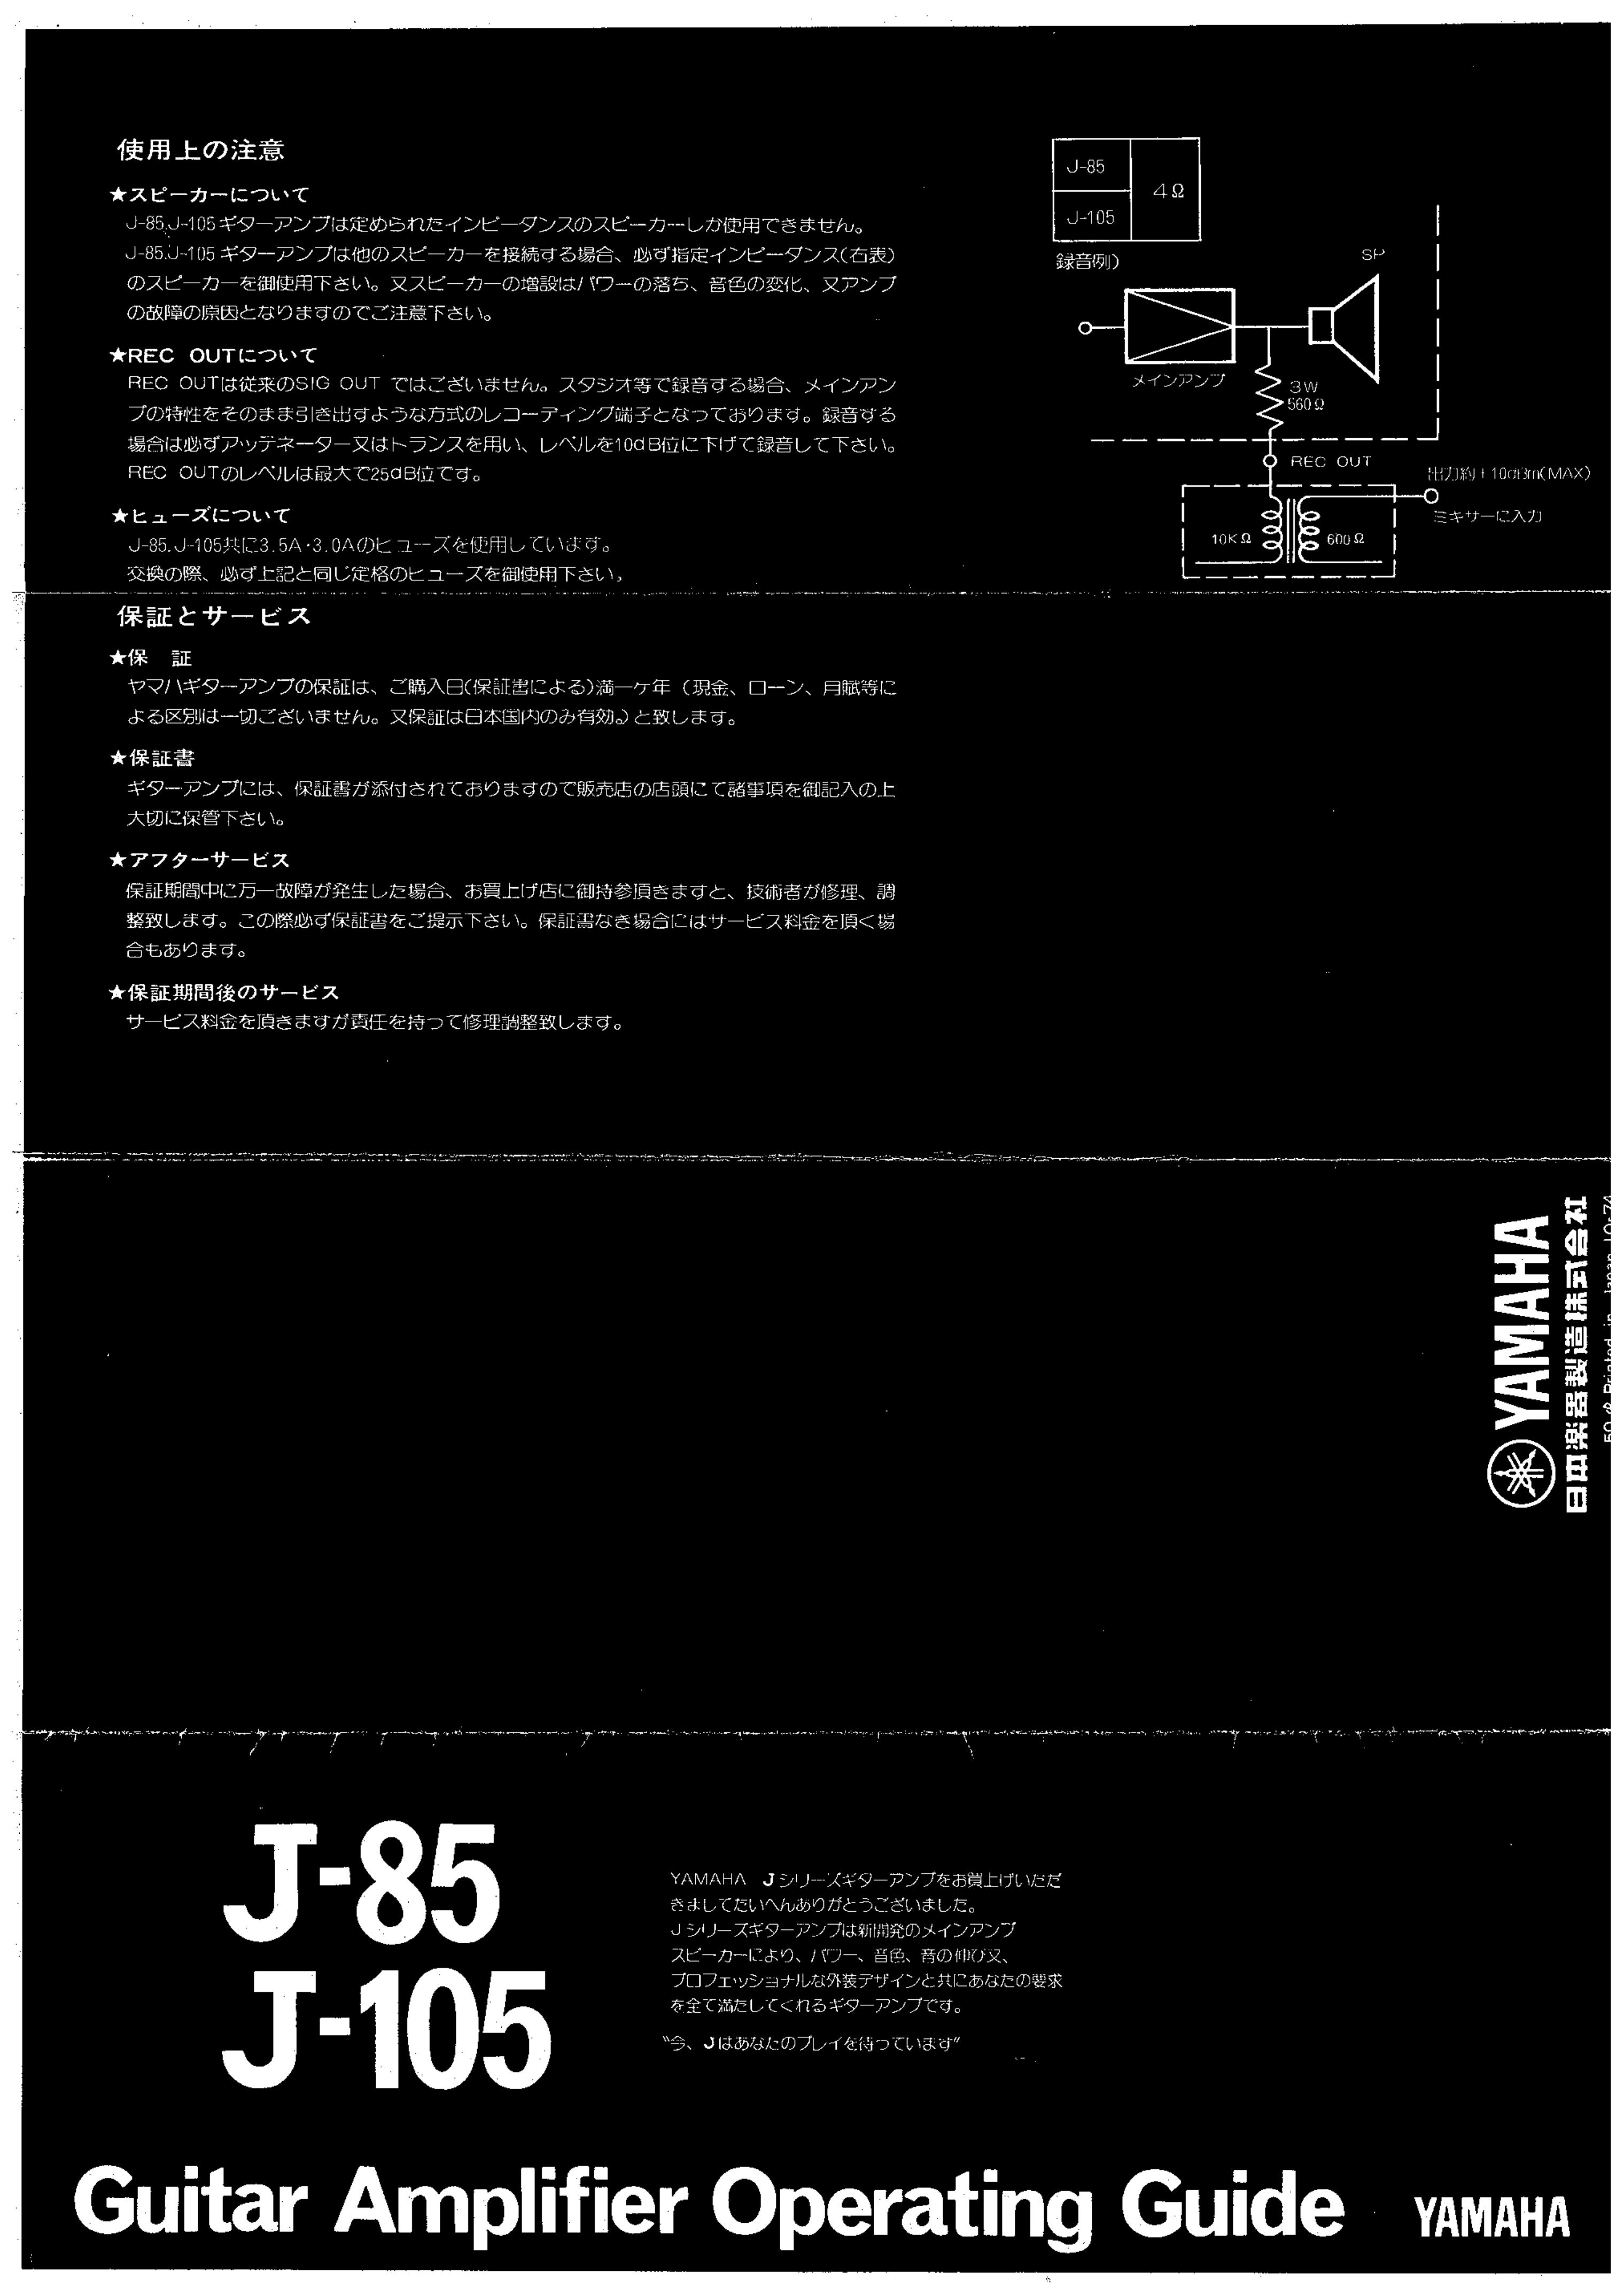 Yamaha J-85 Musical Instrument Amplifier User Manual